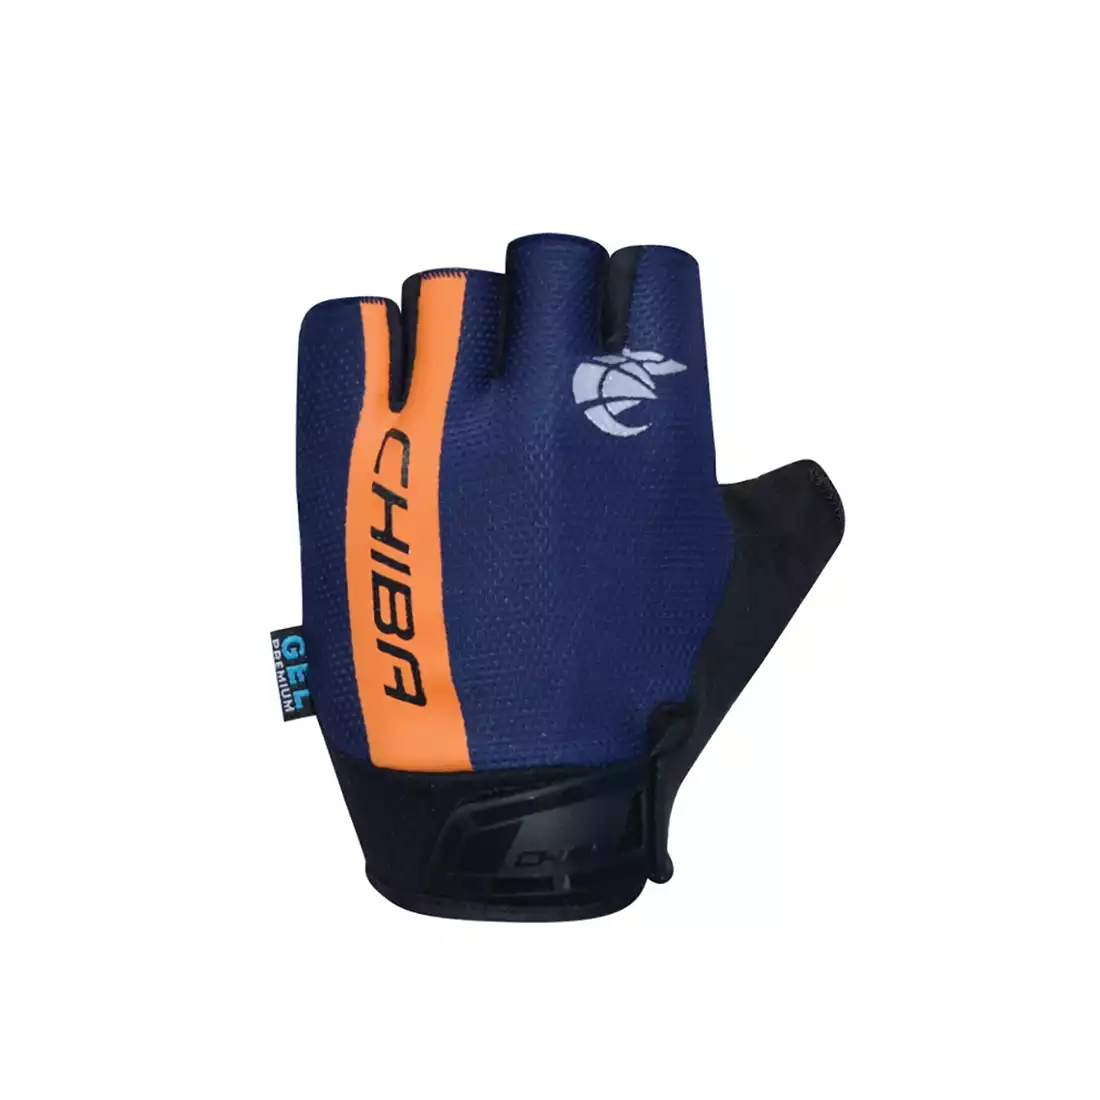 CHIBA AIR STRIKE cycling gloves, navy blue